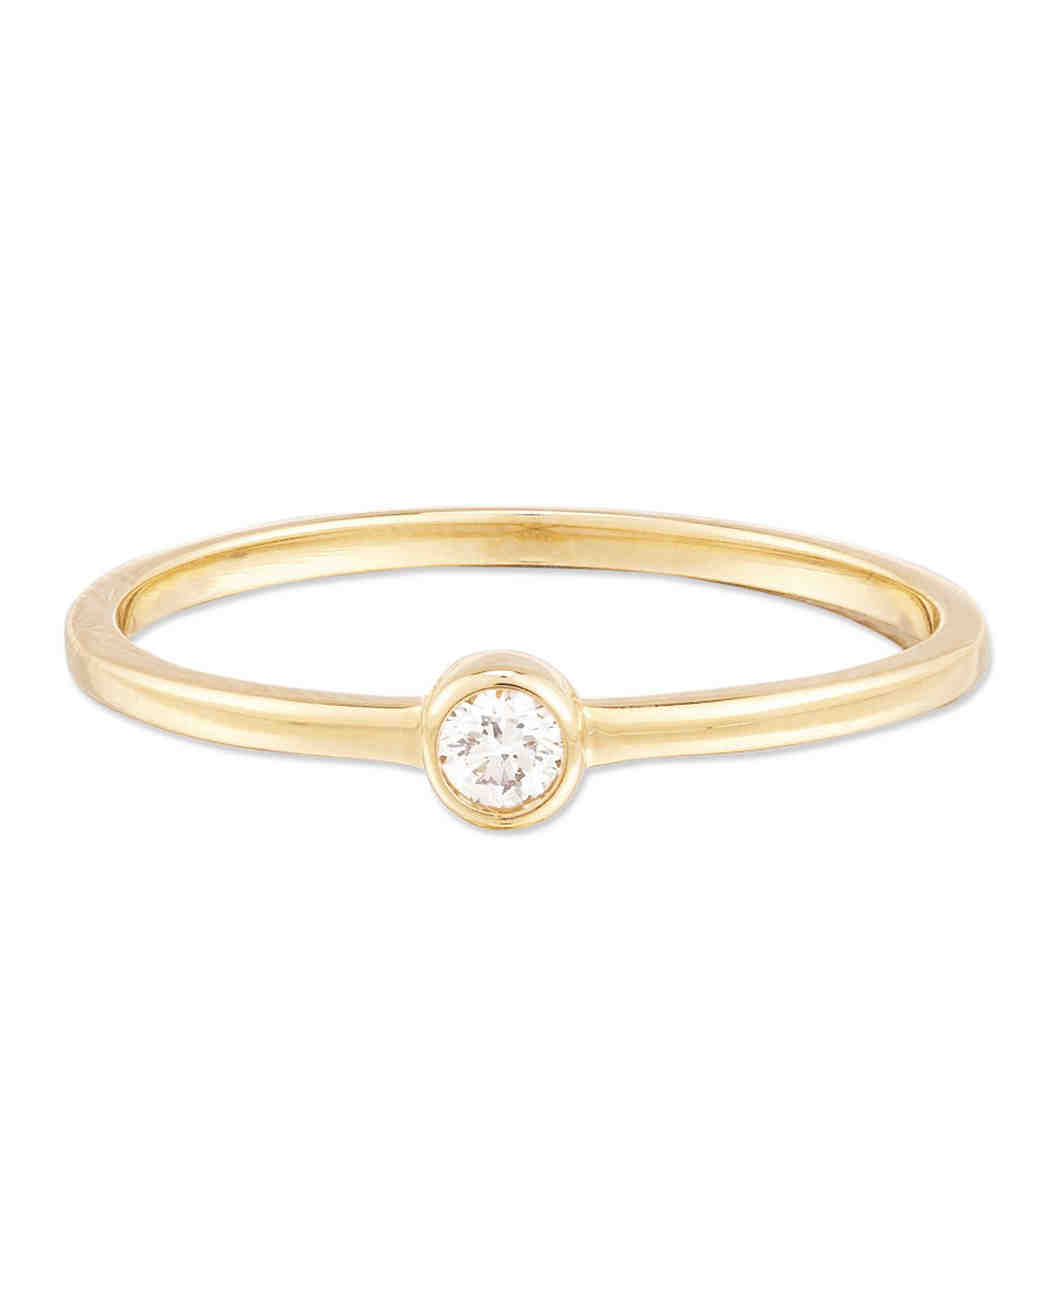 Engagement Rings Under $1,000 That Still Feel Luxe | Martha Stewart Weddings